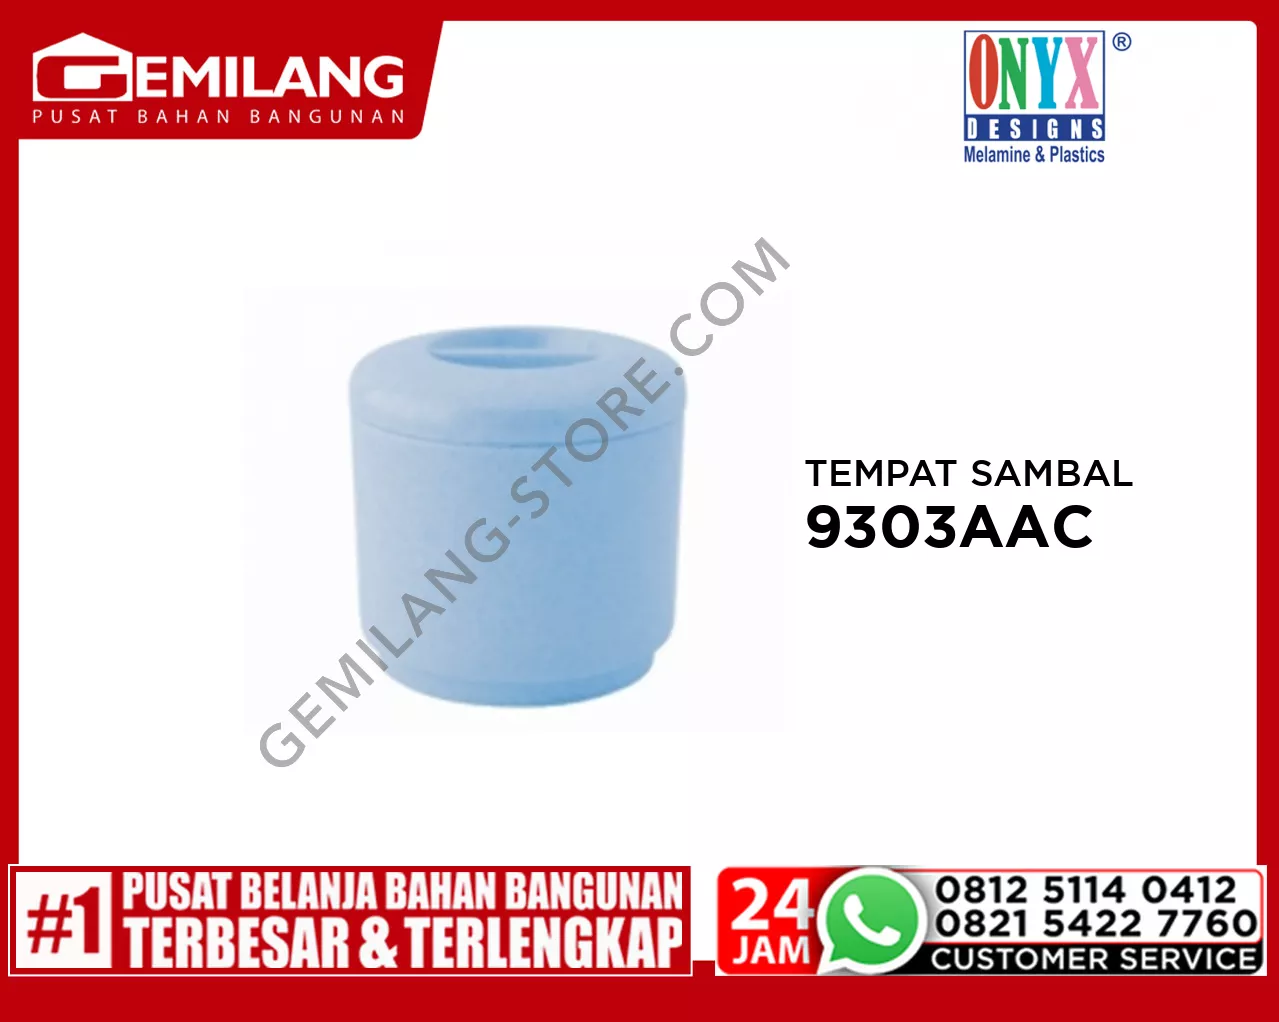 ONYX TEMPAT SAMBAL 9303AAC.BSS